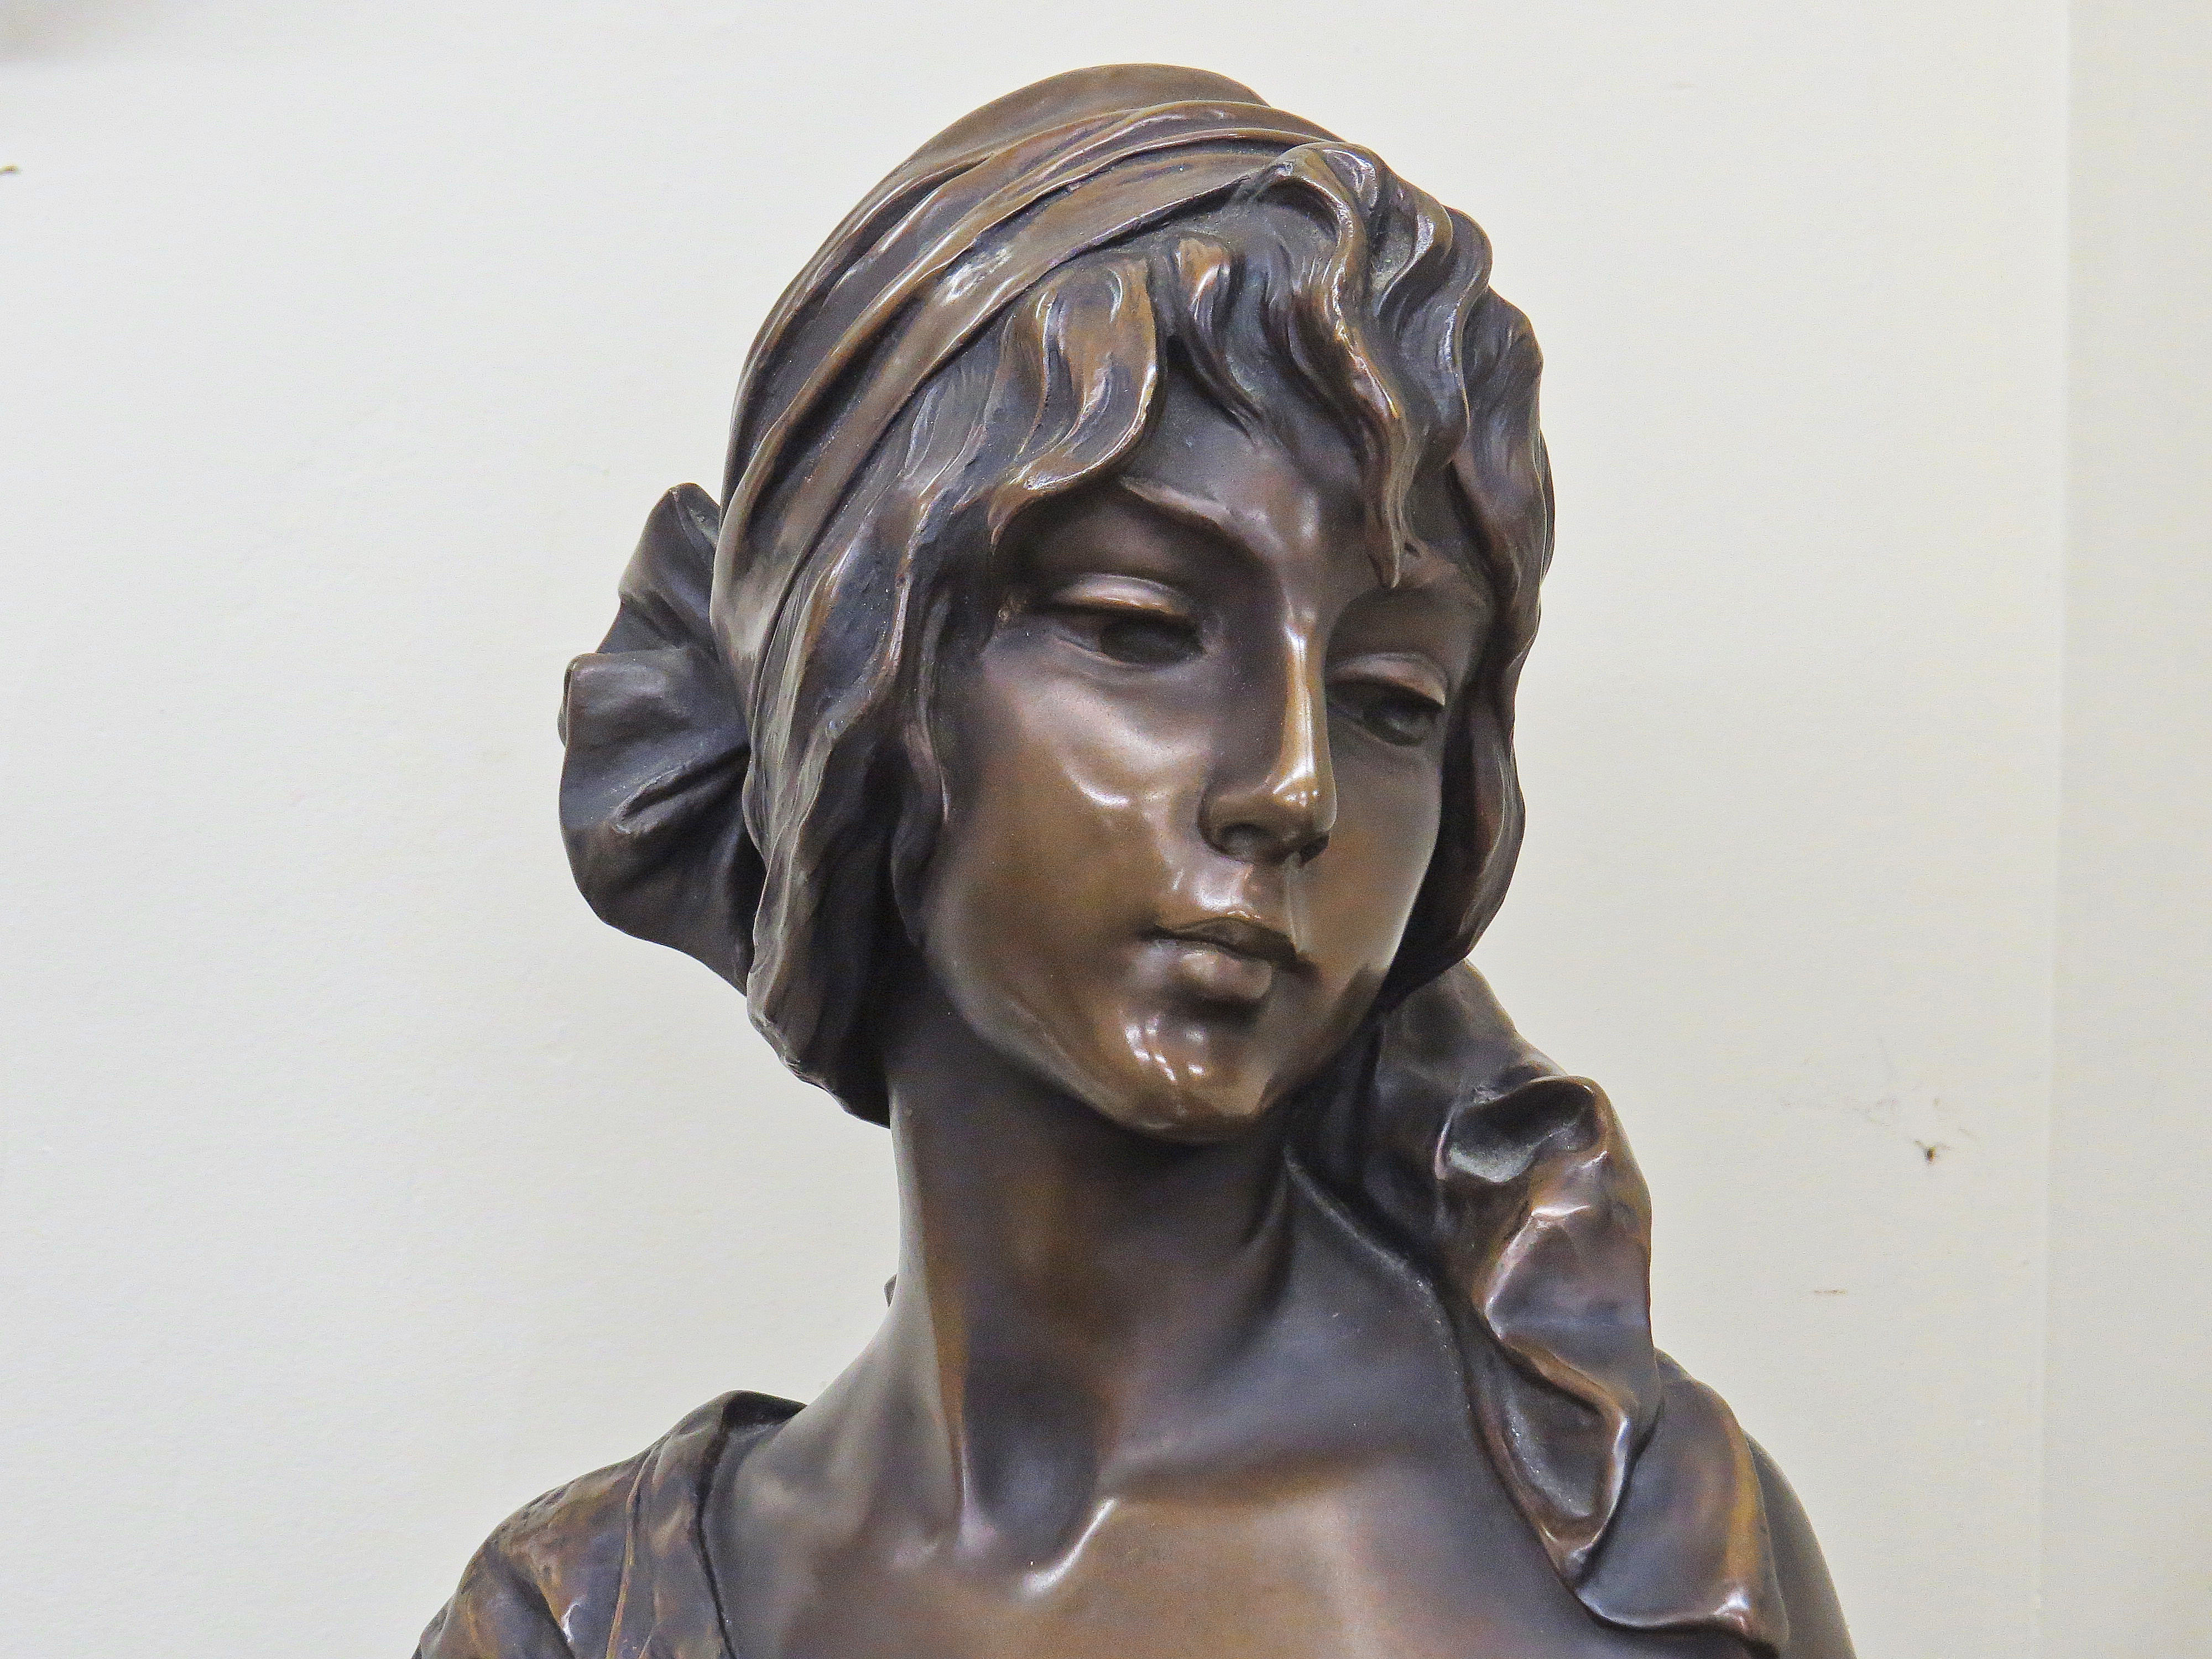 Bronze Bust of a Female Figure; Entitled “Cendrillon” or “Cinderella”